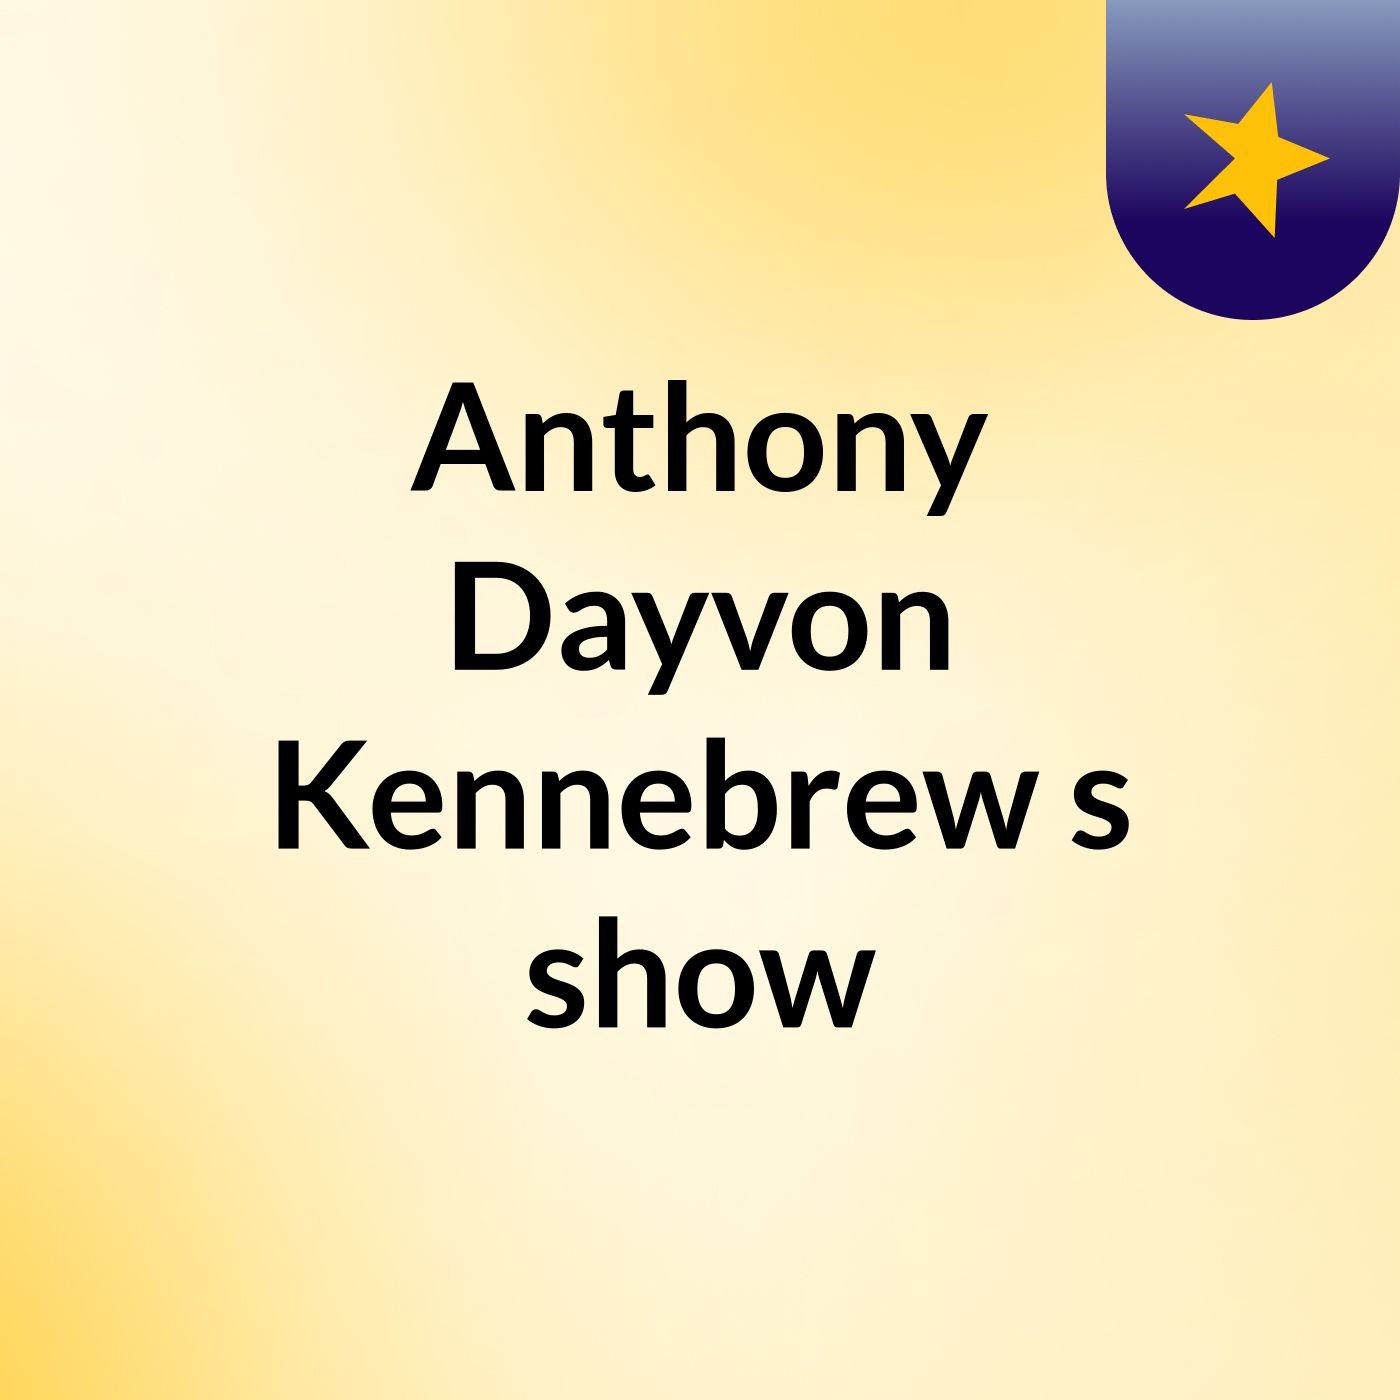 Anthony Dayvon Kennebrew's show